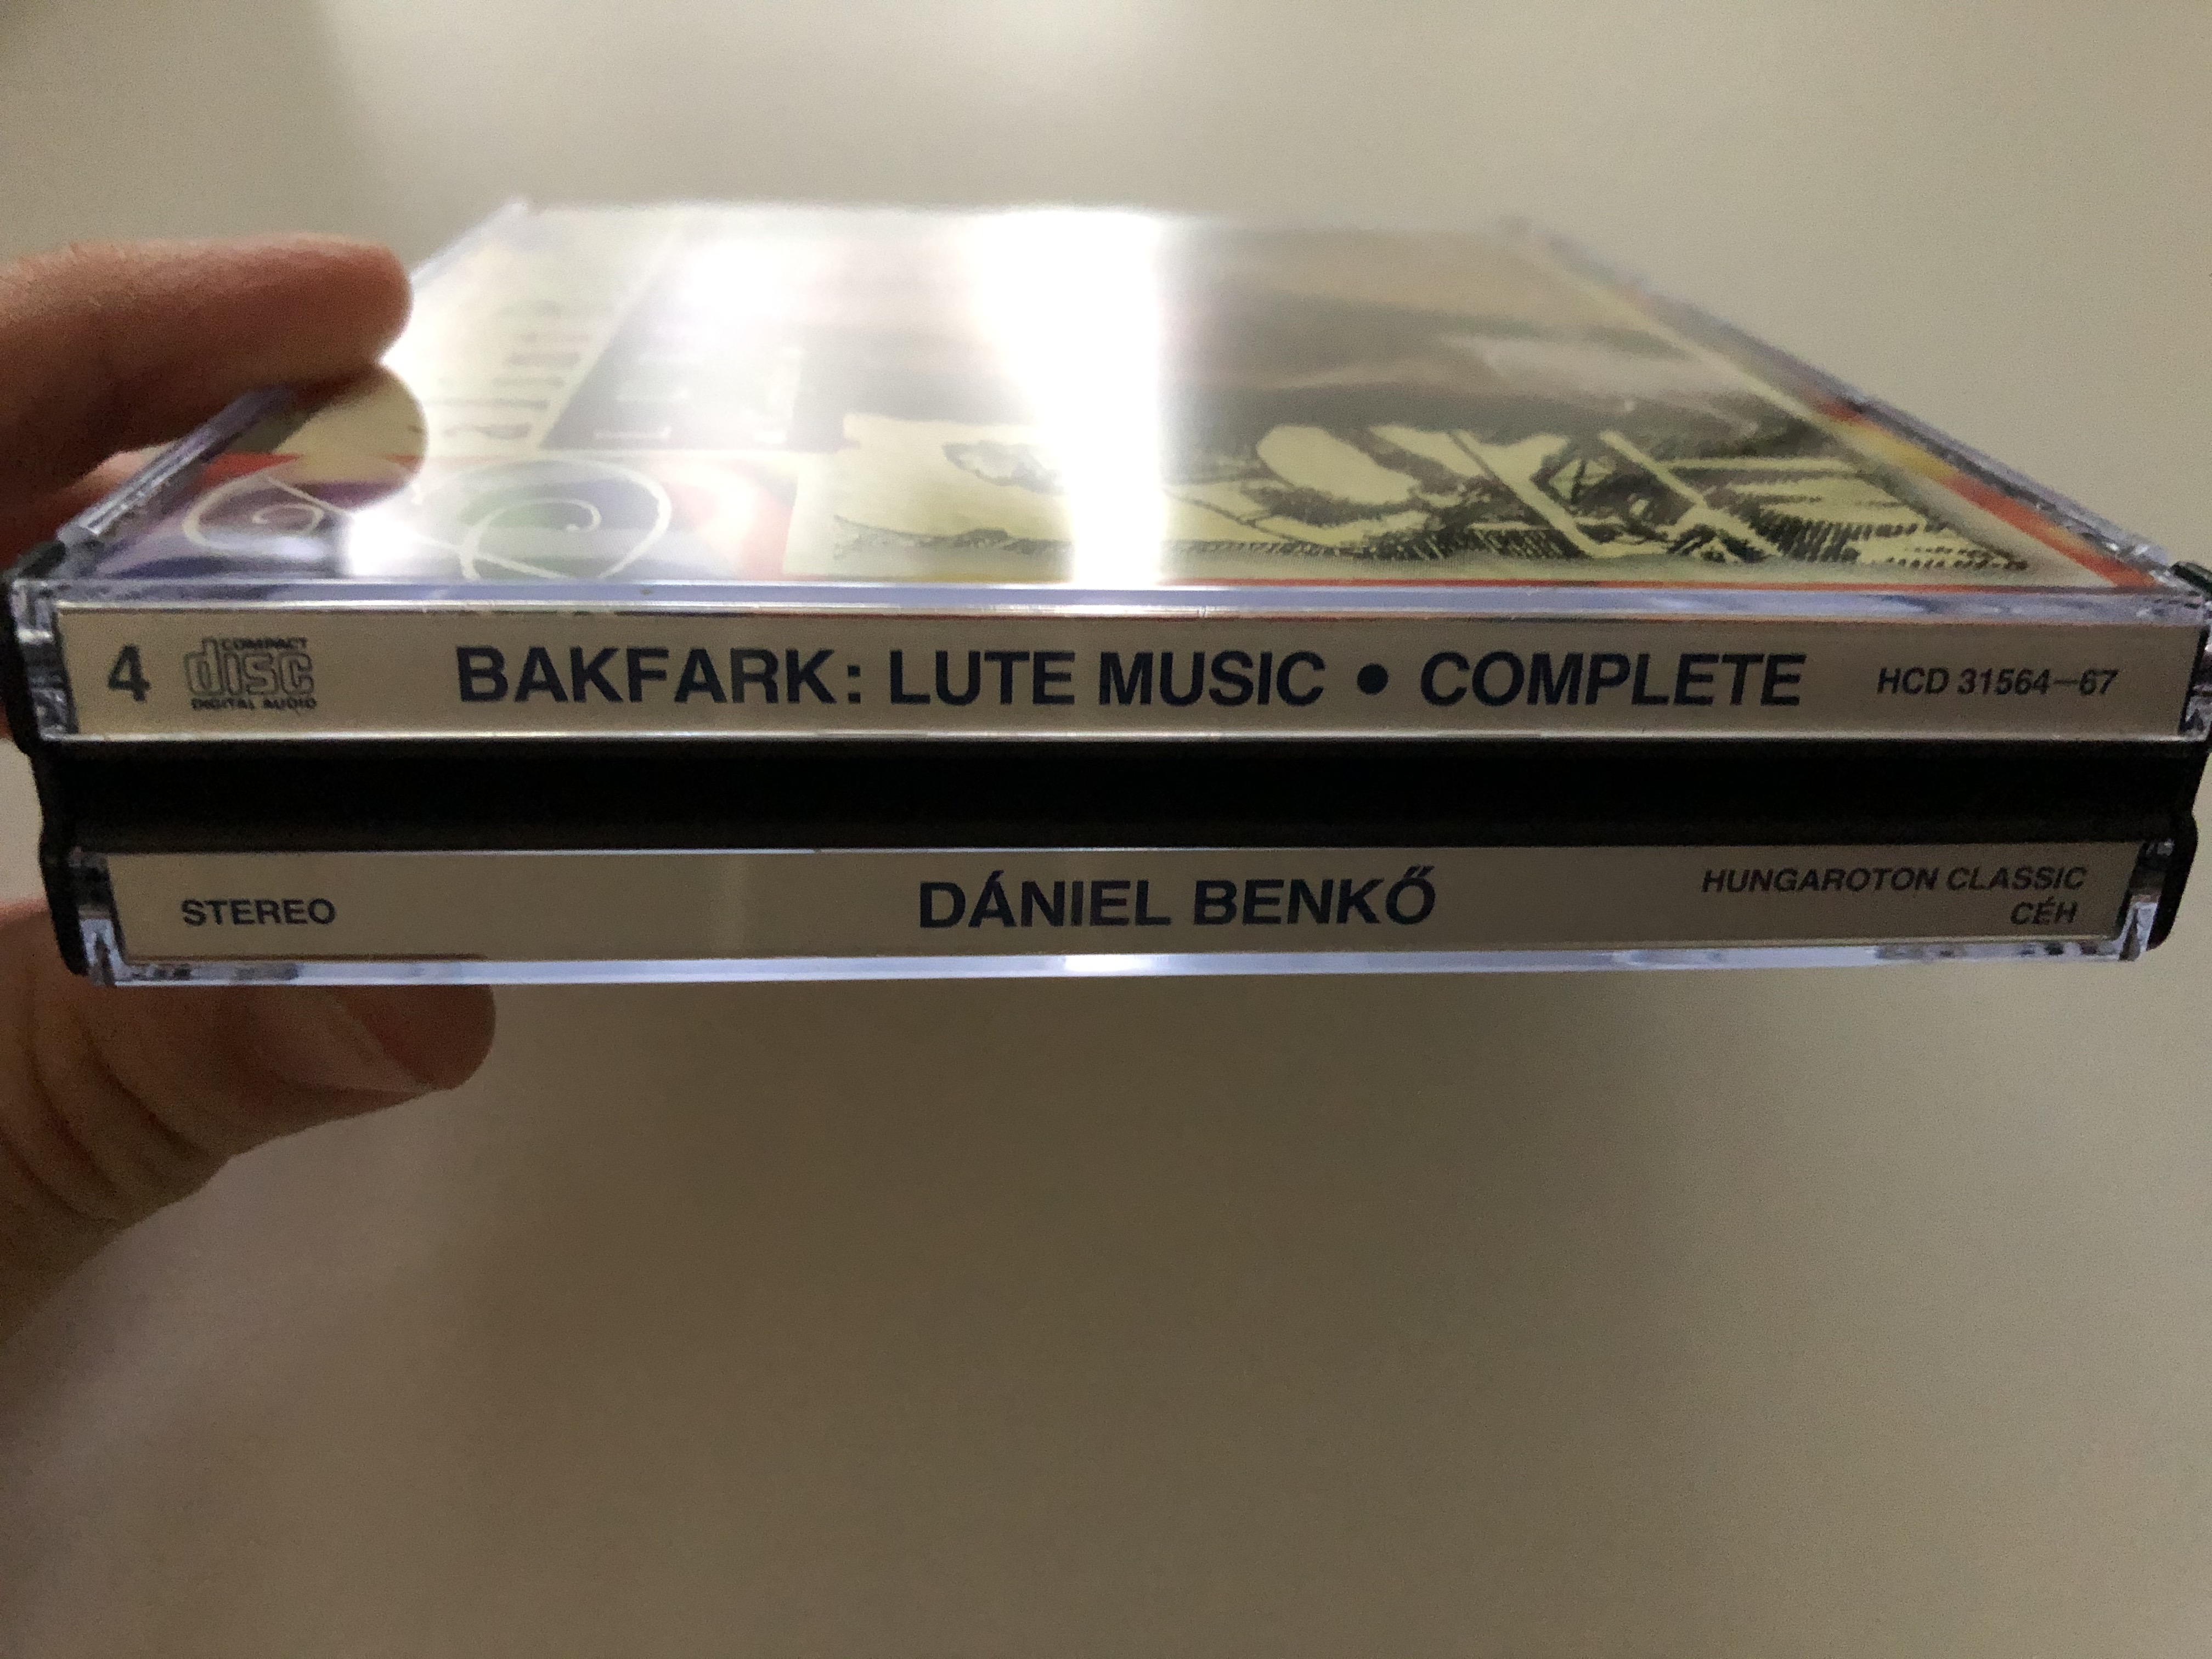 balint-bakfark-lute-music-complete-daniel-benko-hungaroton-classic-4x-audio-cd-1986-stereo-hcd-31564-67-7-.jpg